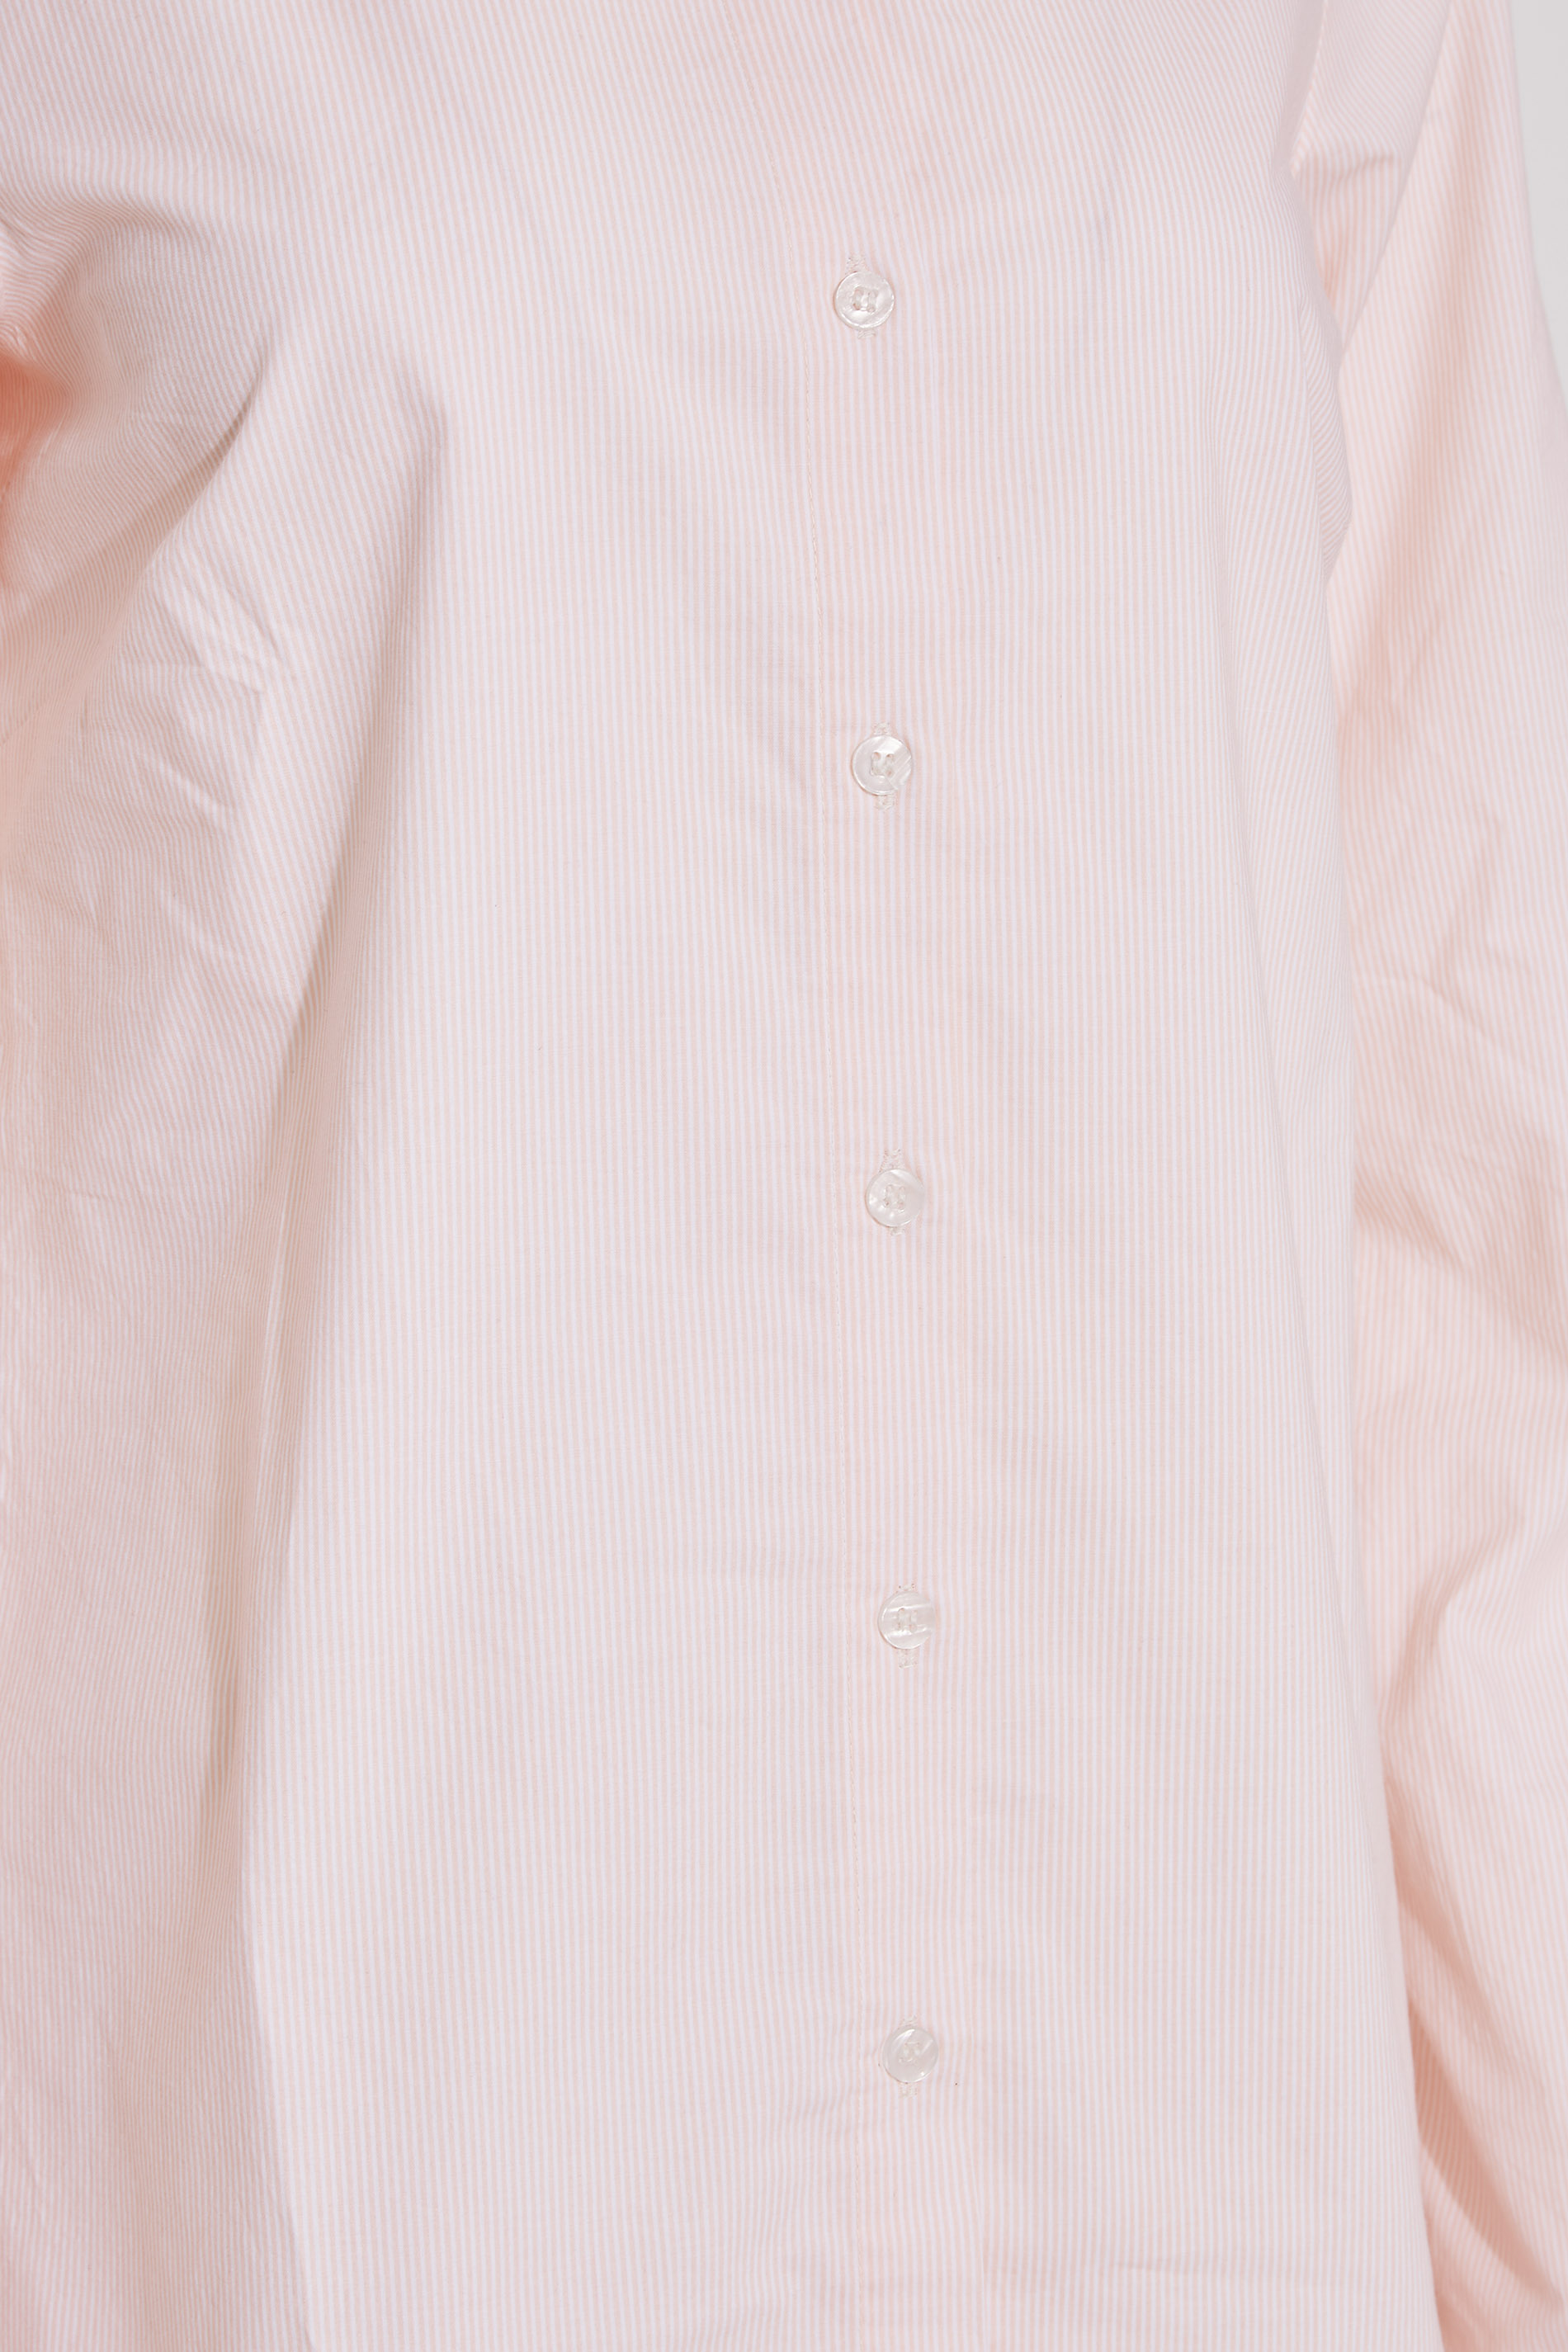 LTS Tall Women's Pink Stripe Fitted Shirt | Long Tall Sally 1